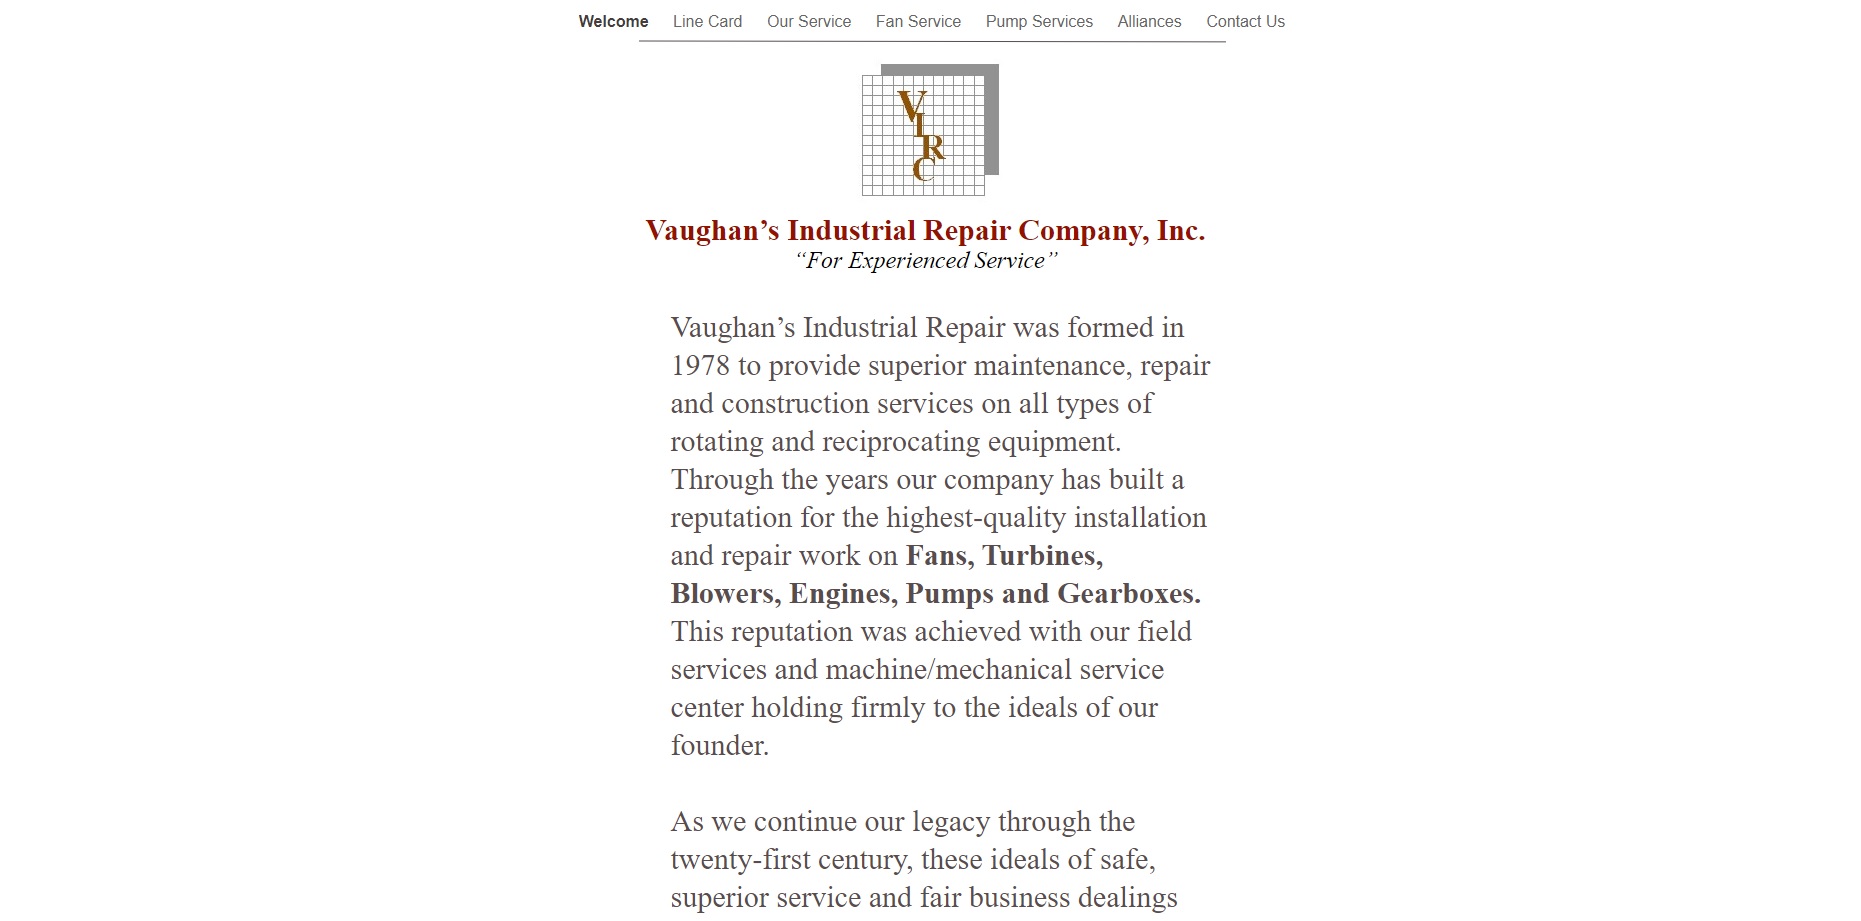 Vaughan's Industrial Repair Co., Inc.